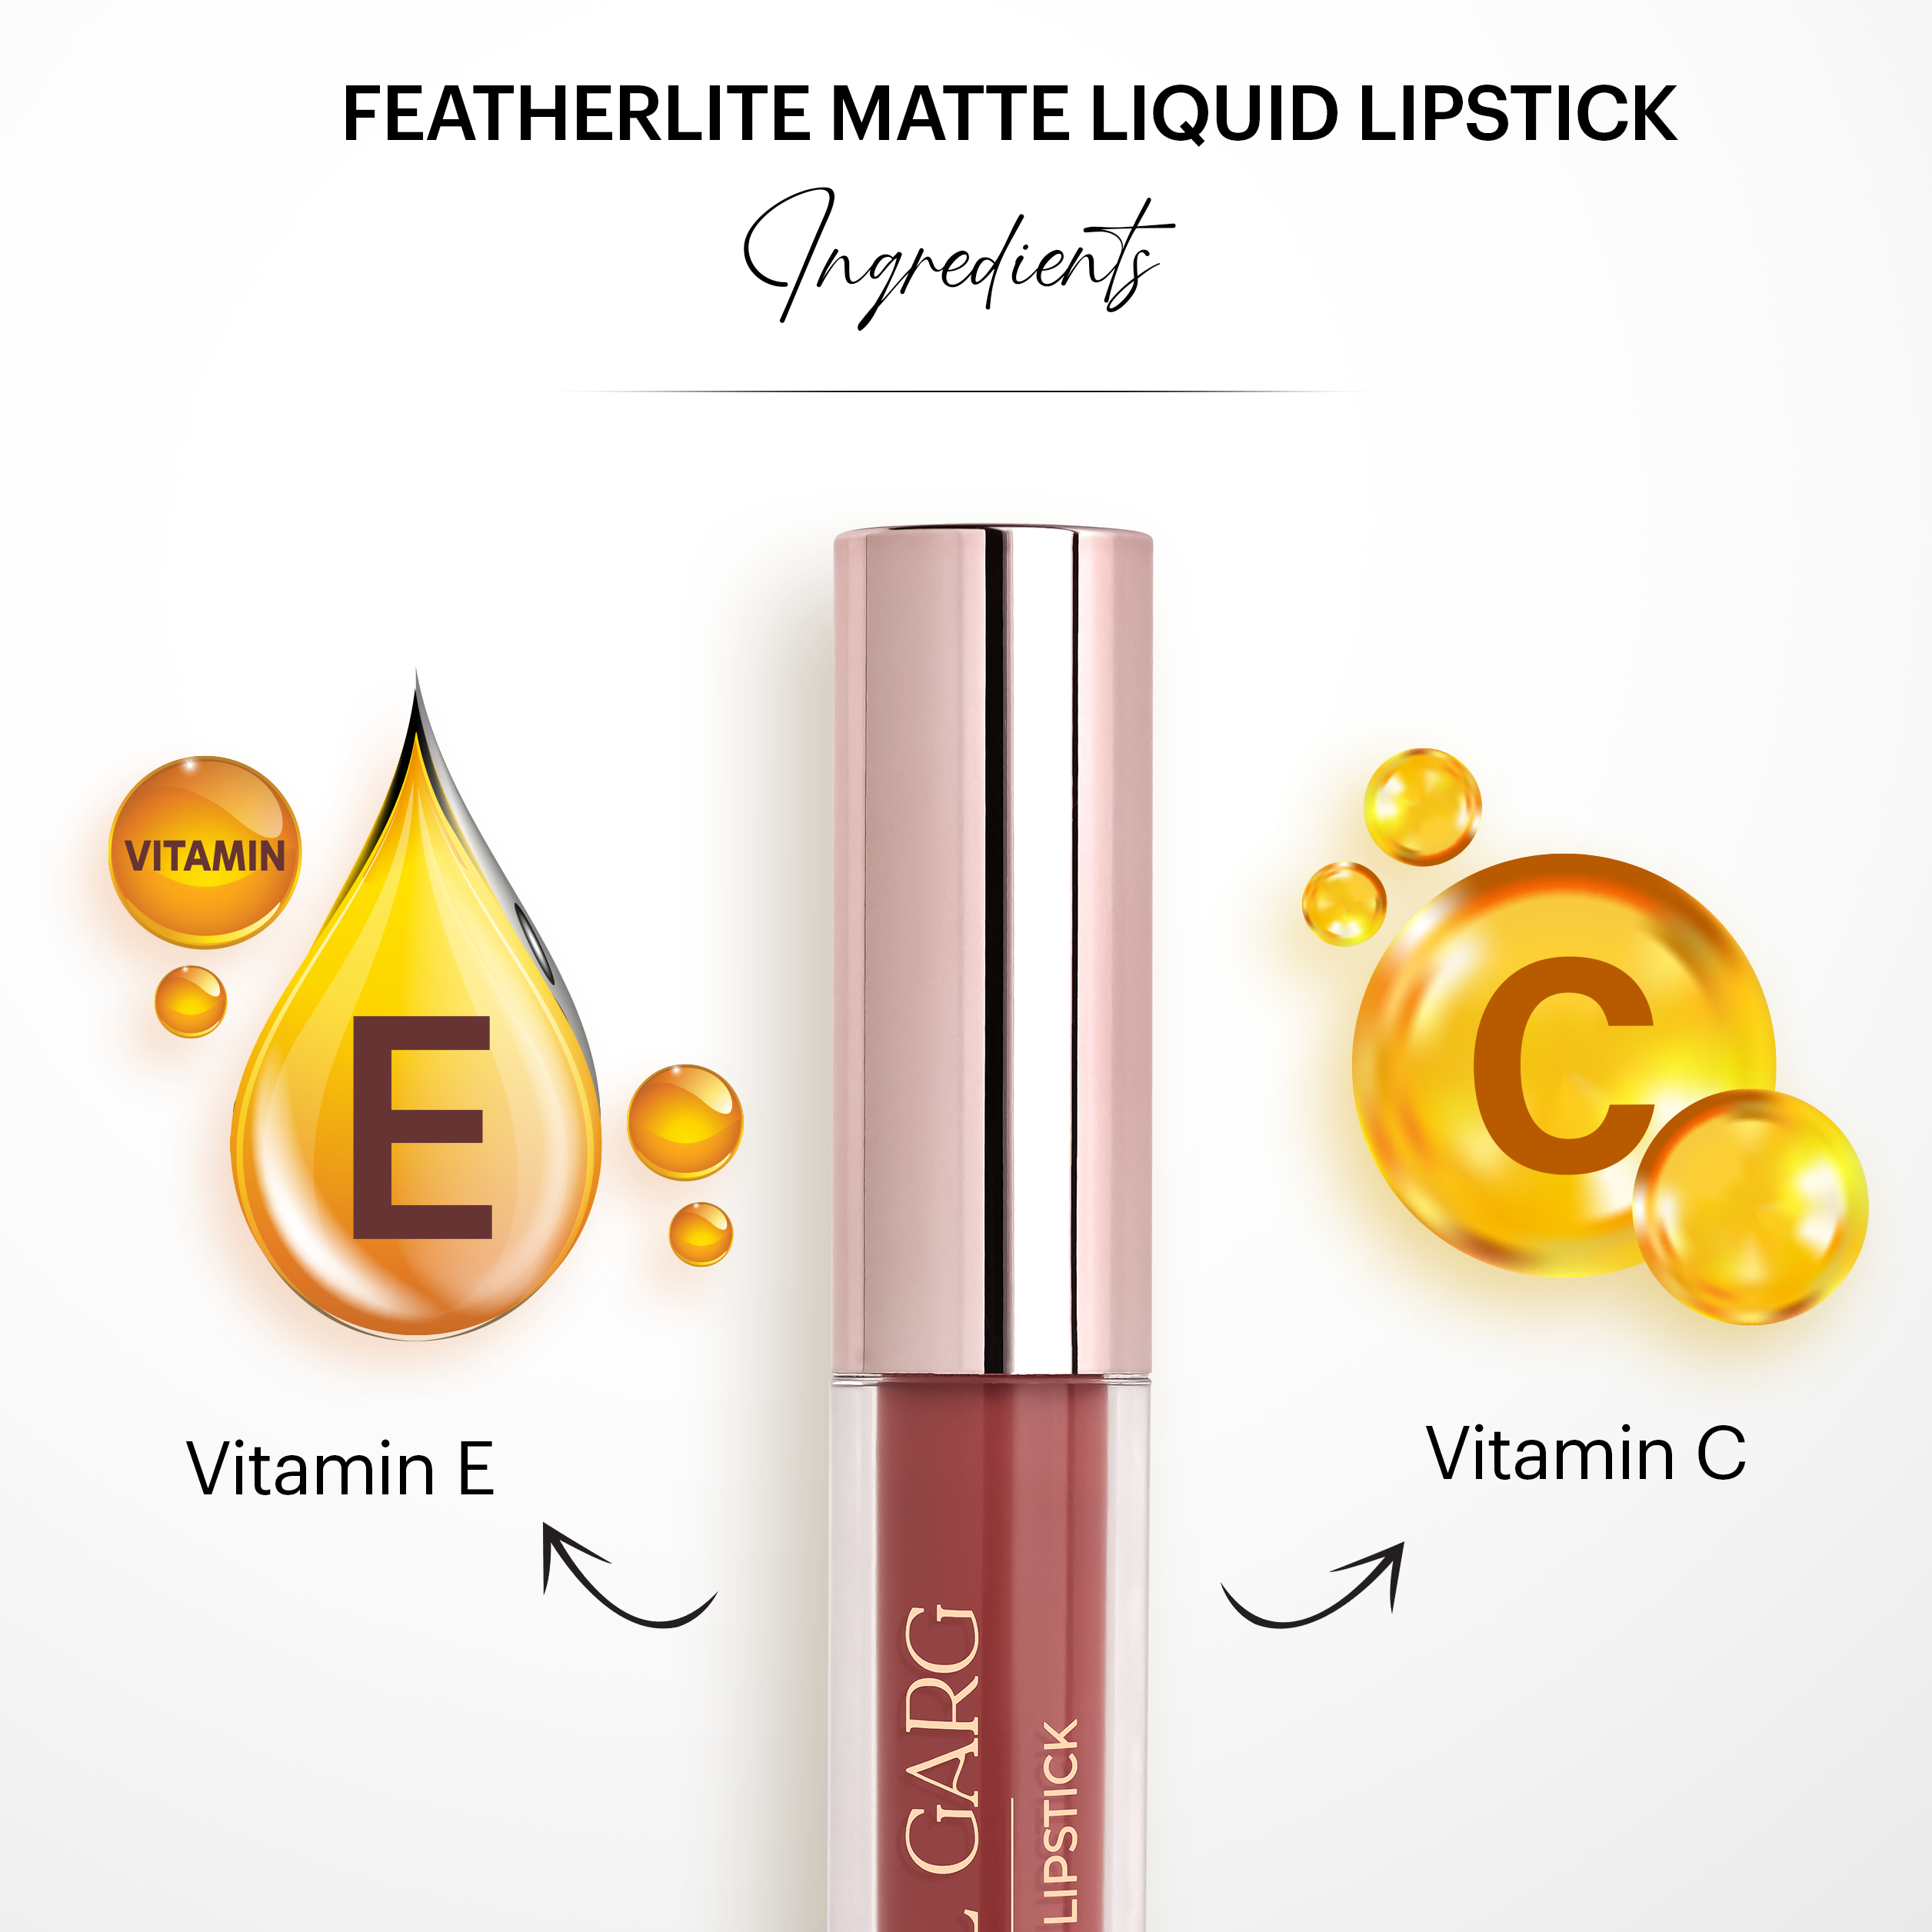 Featherlite Matte Liquid Lipstick: Fantasy 84